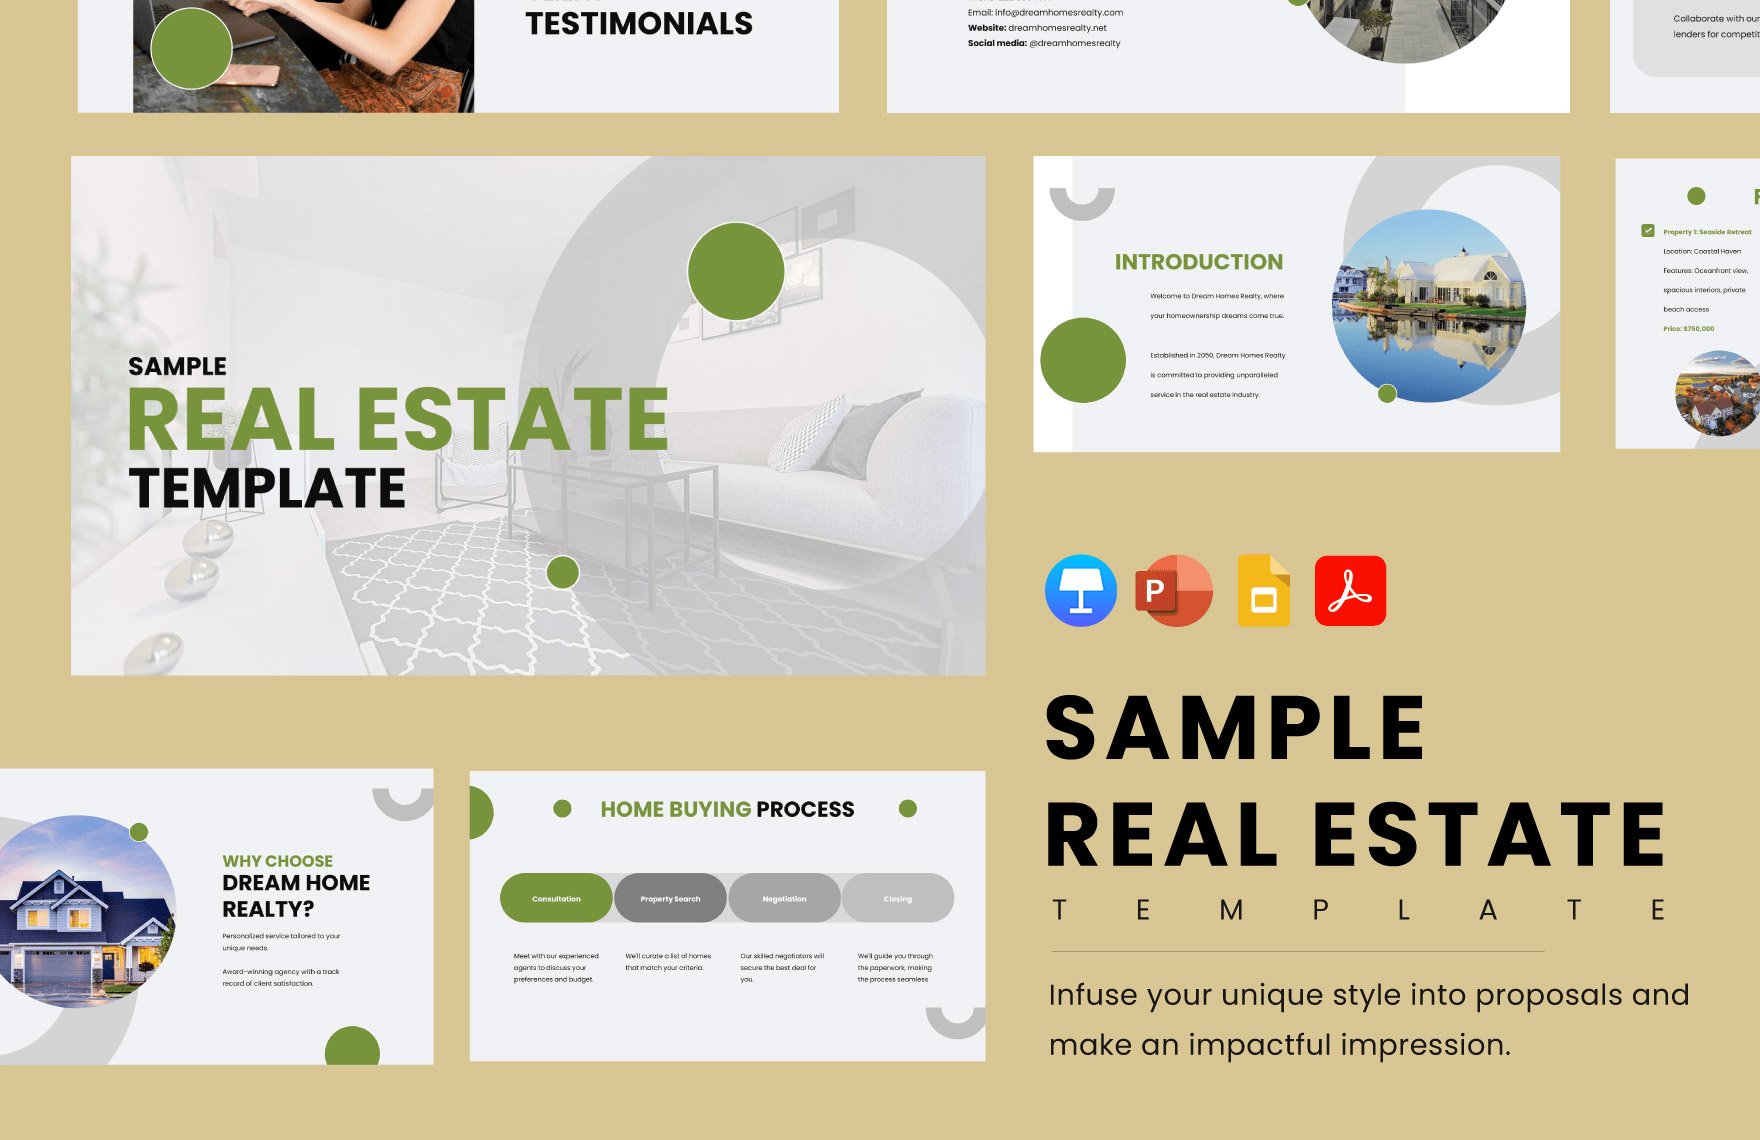 Sample Real Estate Template